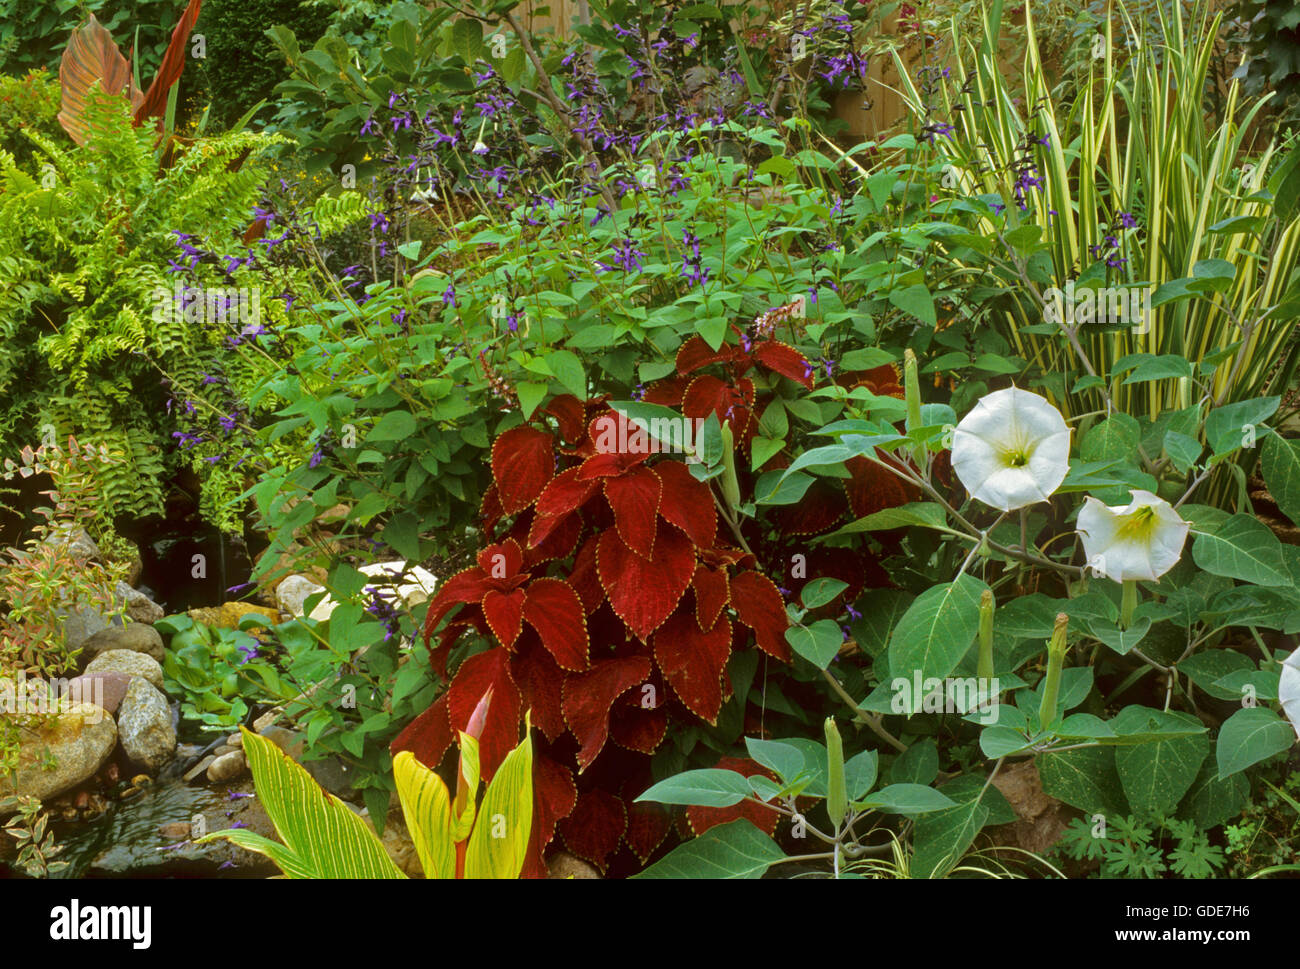 Garden with Moon flower, coleus, salvia, variegated iris, Stock Photo